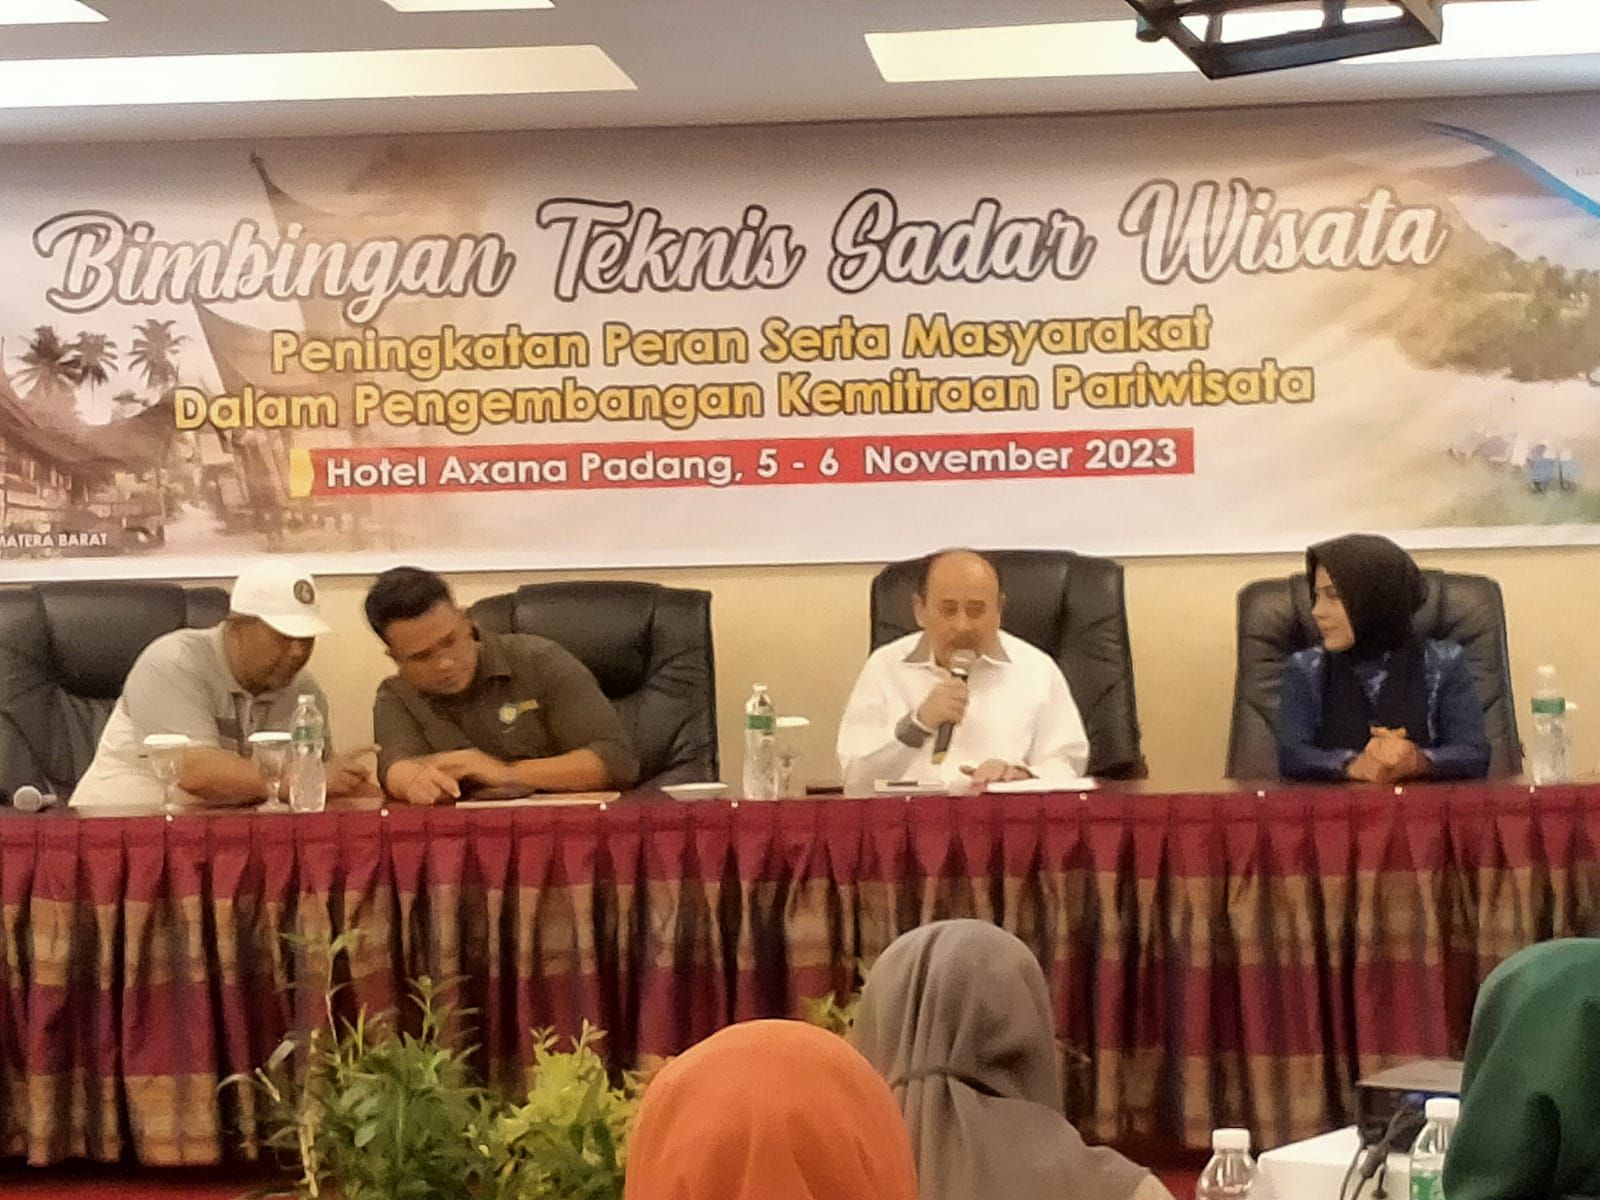 Anggota DPRD Provinsi Sumatera Barat, Ismet Amzis, saat memberikan pemaparan pada kegiatan Bimtek Sadar Wisata angkatan ke XX